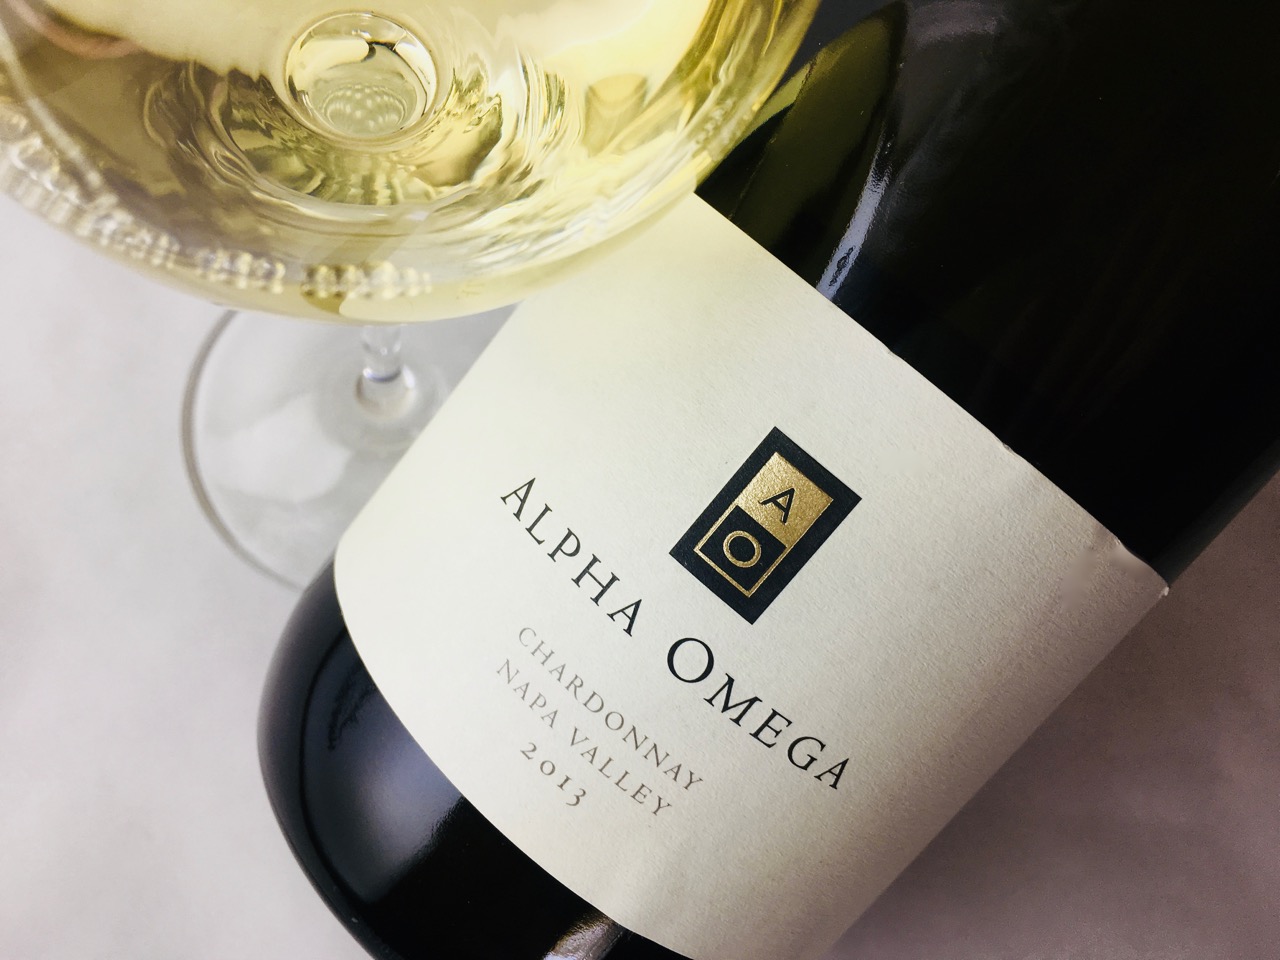 2013 Alpha Omega Chardonnay Napa Valley